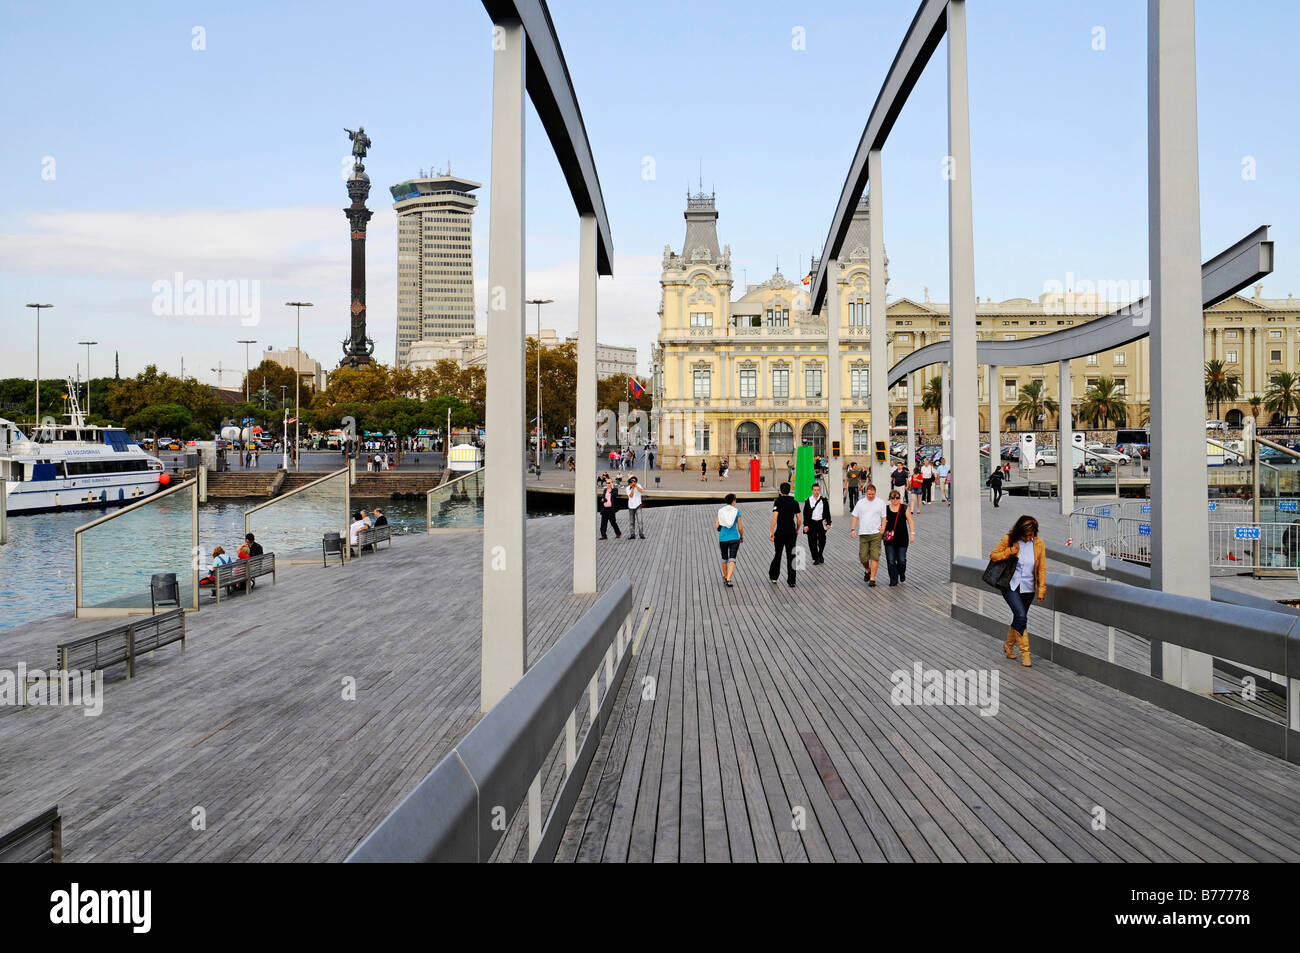 People on a bridge, port authority, Rambla de Mar, Port Vell, Moll de Espana, Barcelona, Catalonia, Spain, Europe Stock Photo